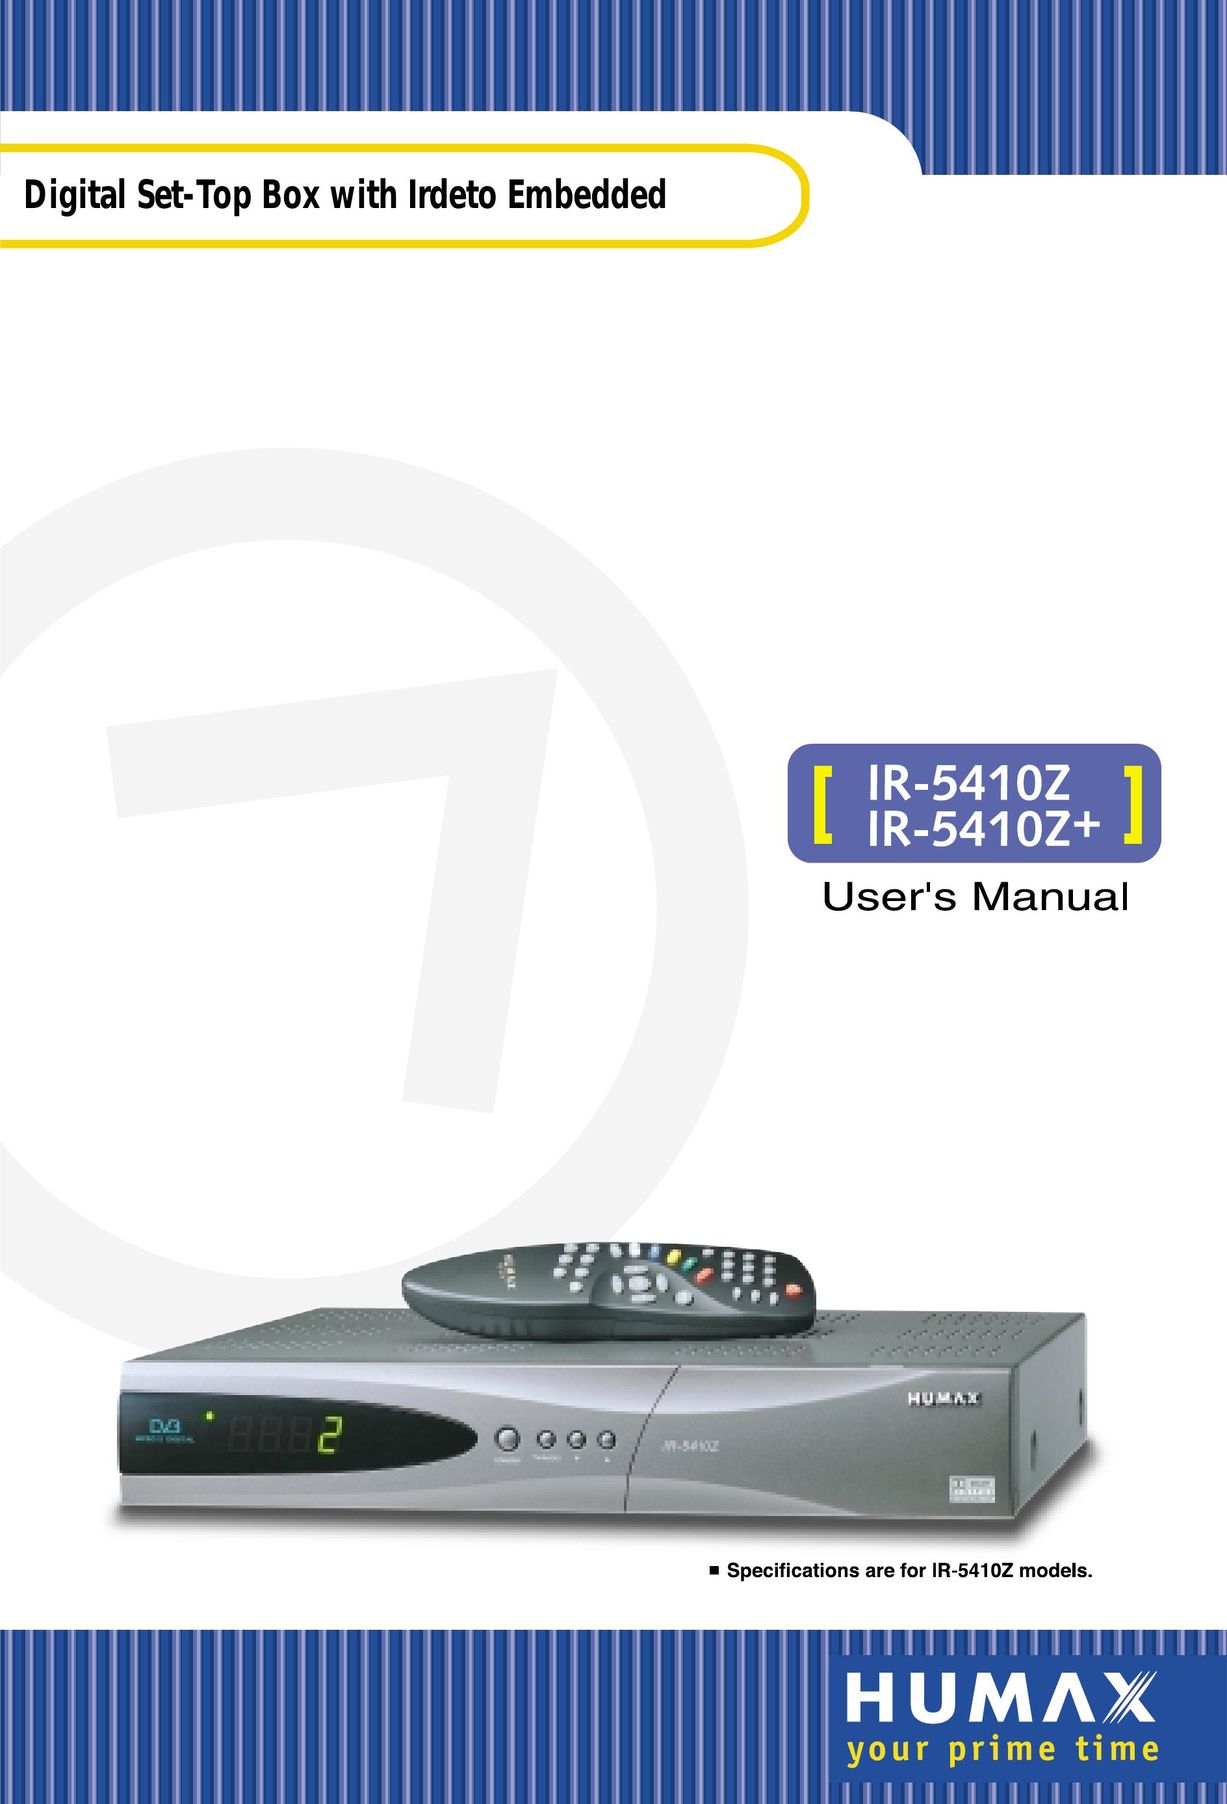 Humax IR-5410Z+ Satellite TV System User Manual